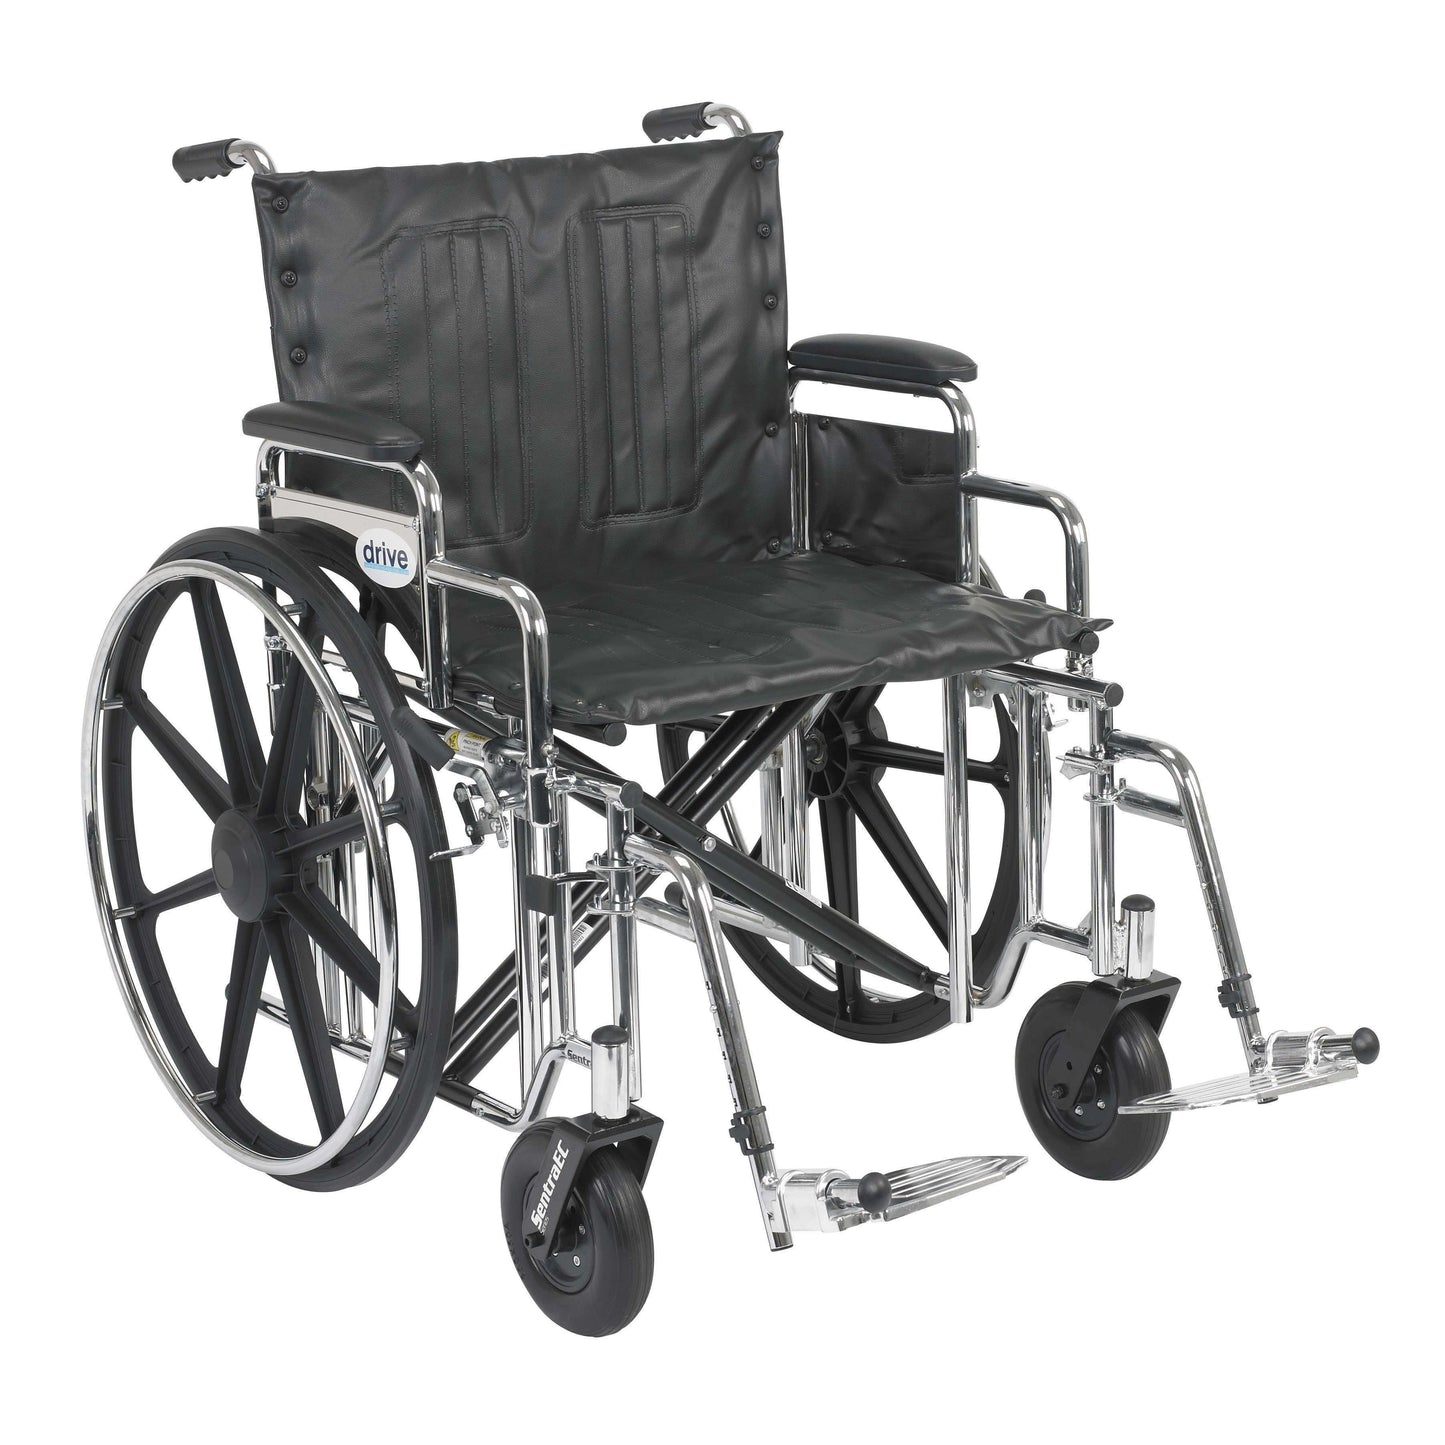 Drive std22dda-sf Sentra Extra Heavy Duty Wheelchair, Detachable Desk Arms, Swing away Footrests, 22" Seat